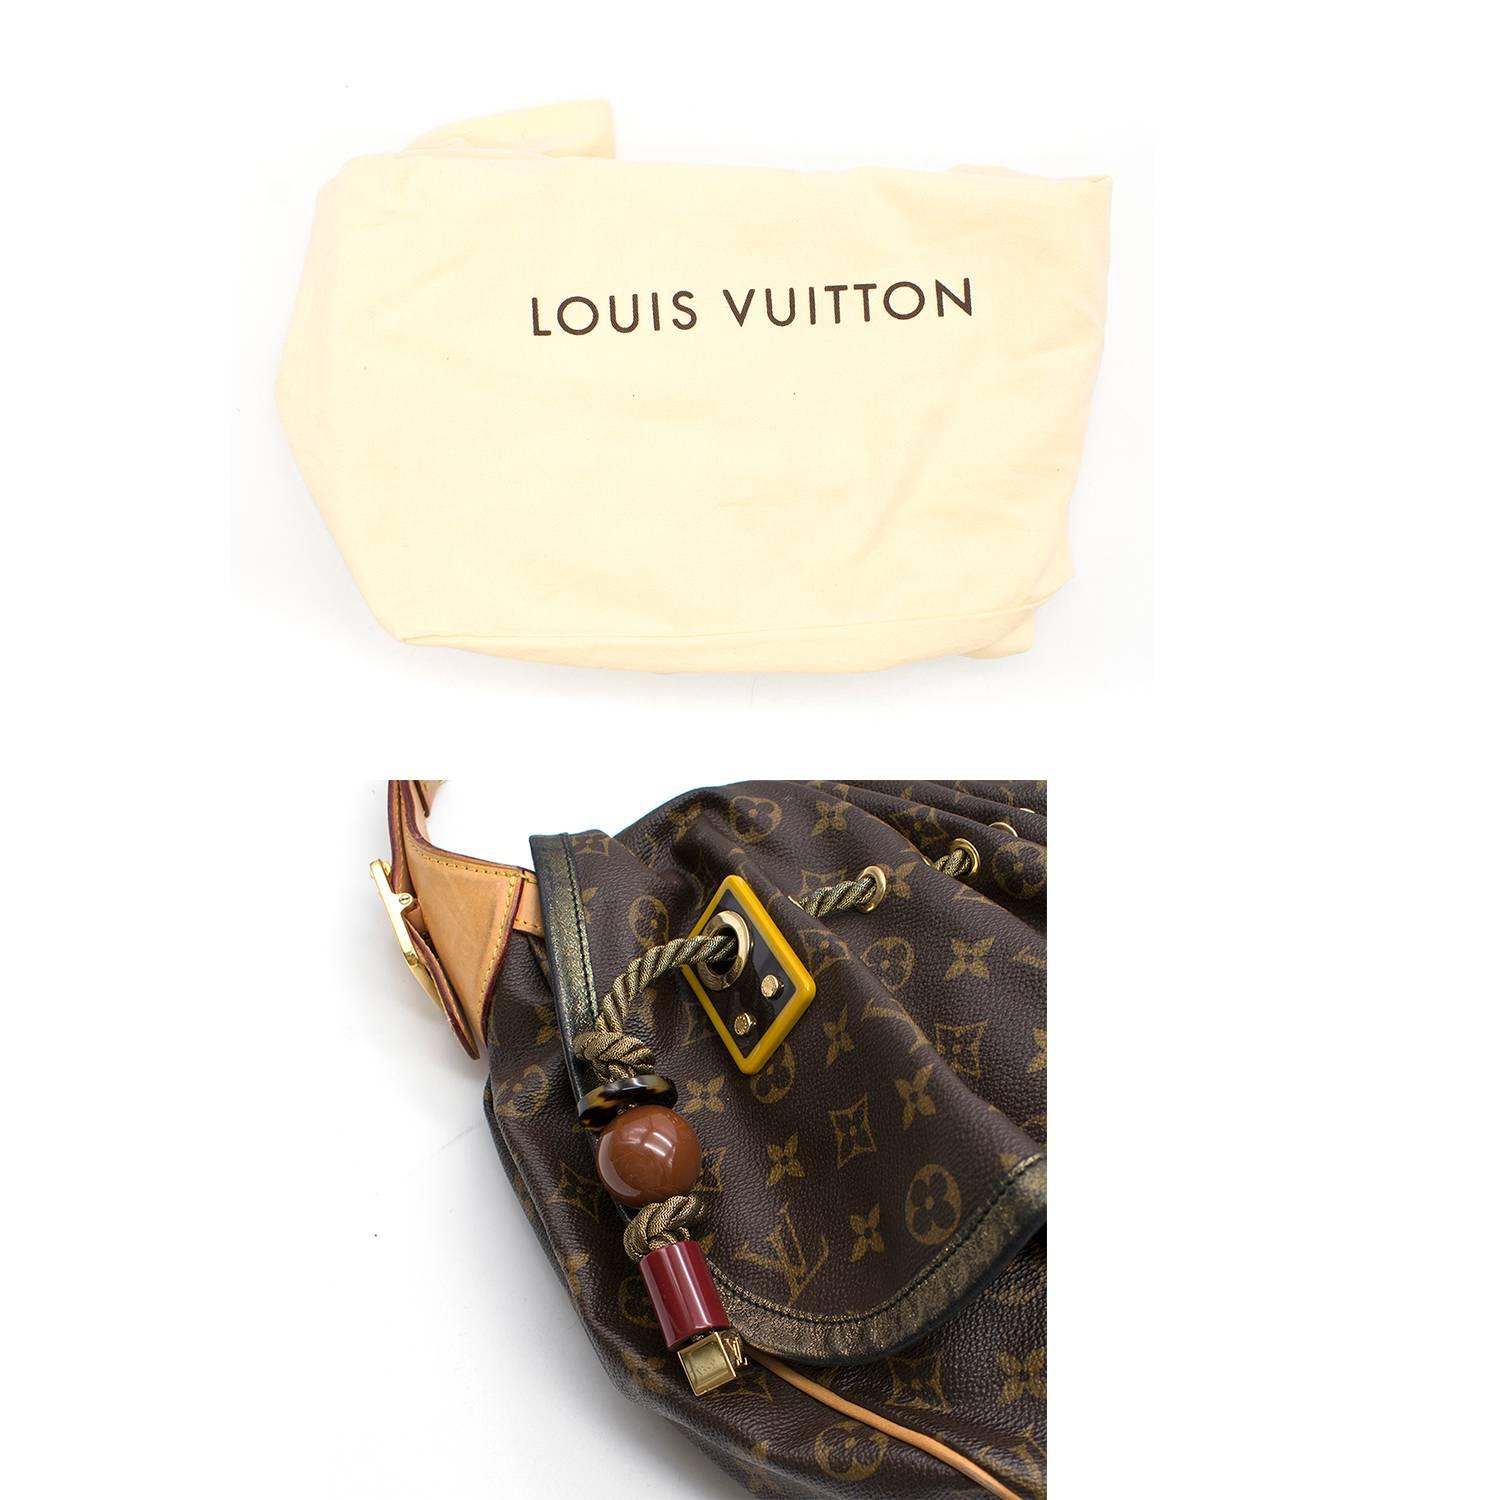 Louis Vuitton Canvas Monogram Bag 5